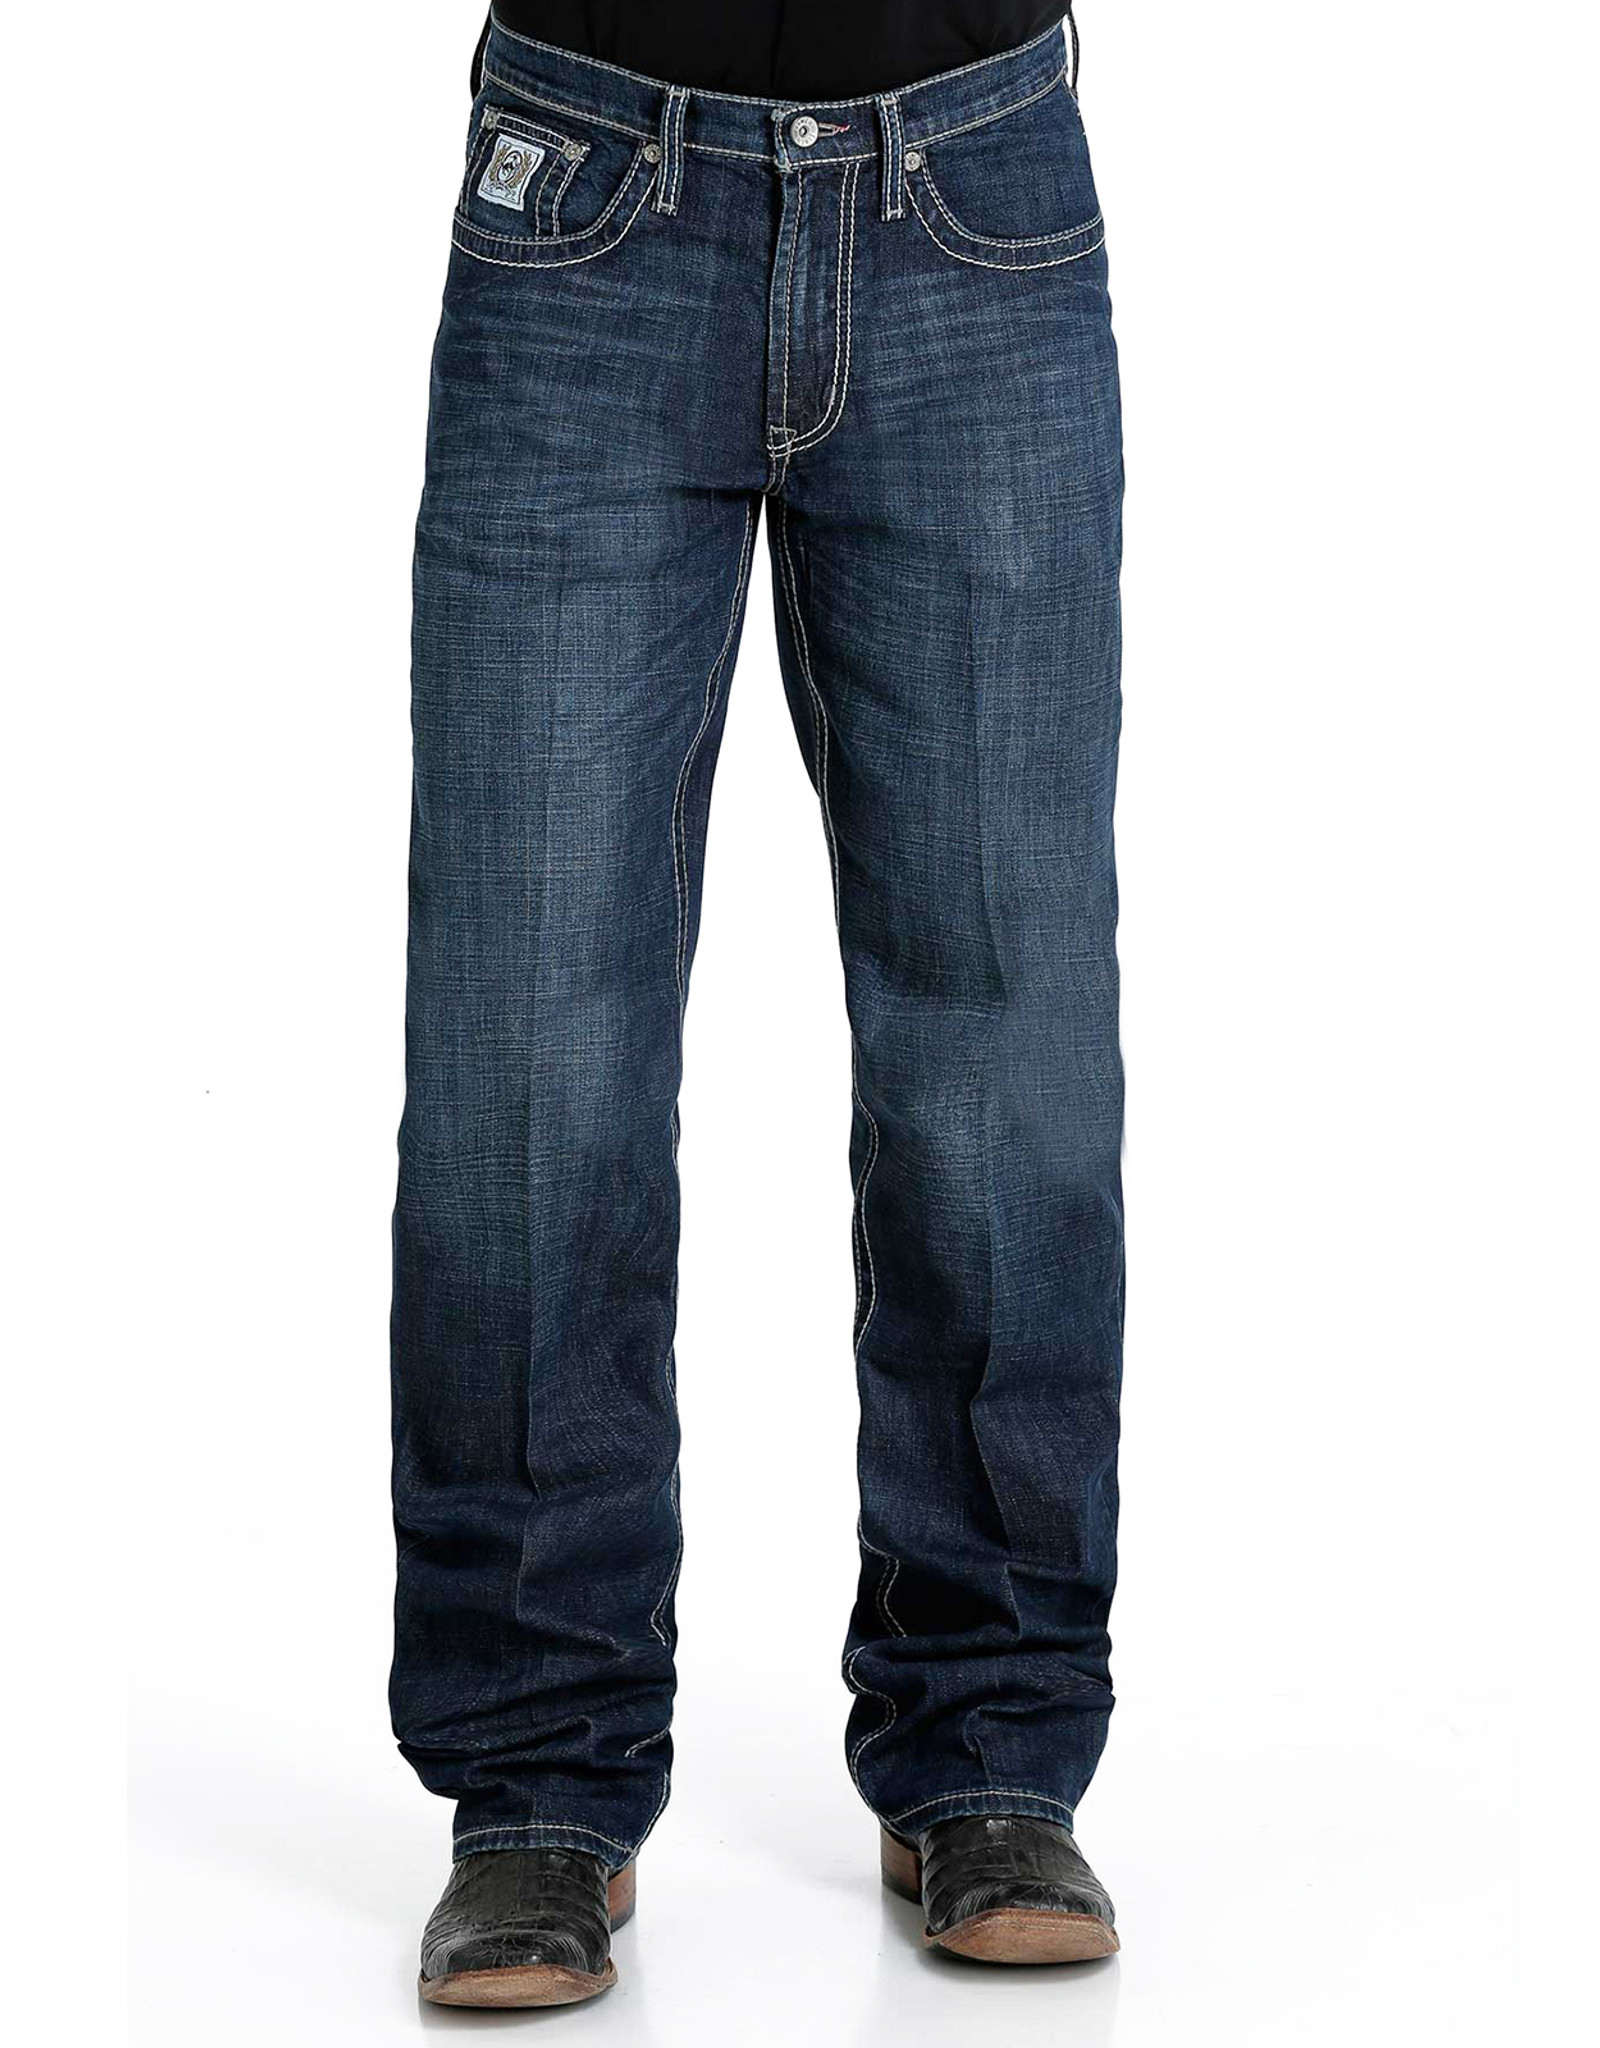 Cinch Jeans  Men's Loose Fit Black Label - Dark Stonewash